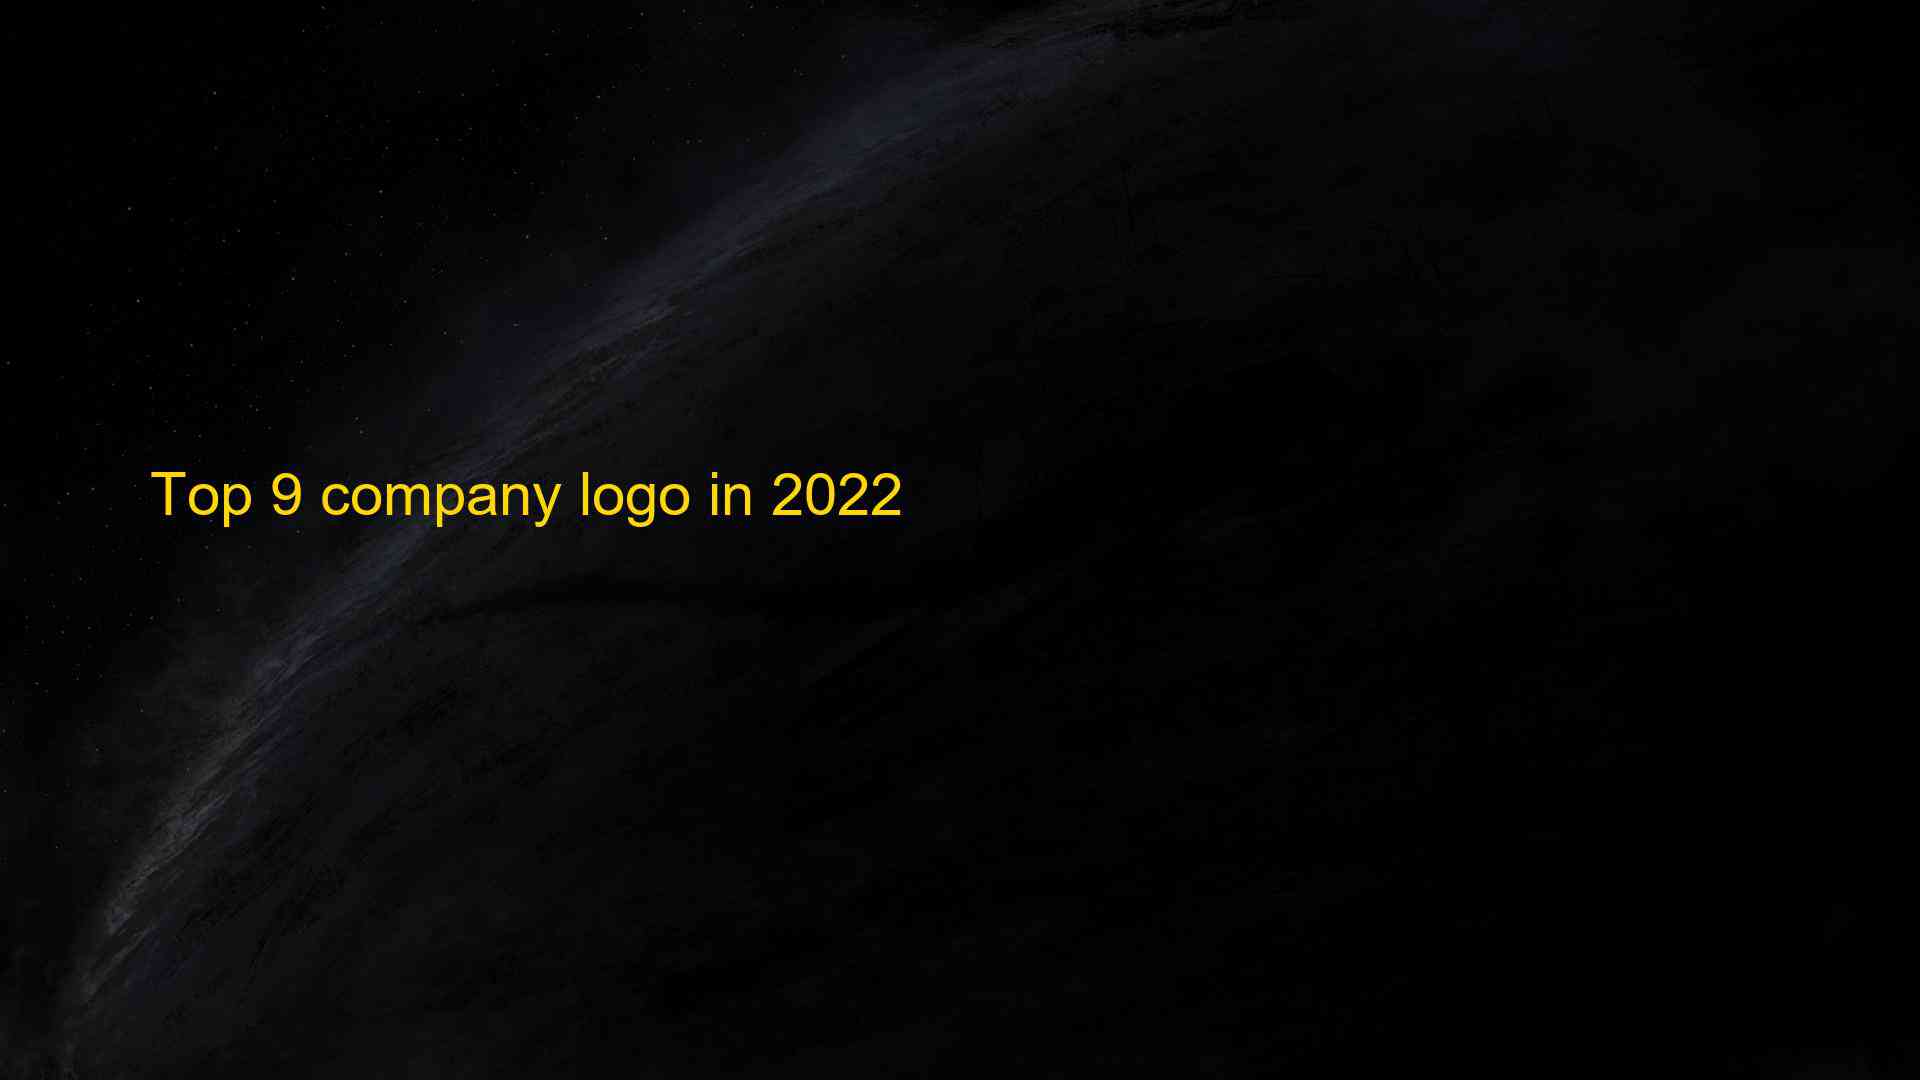 Top 9 company logo in 2022 1659454325